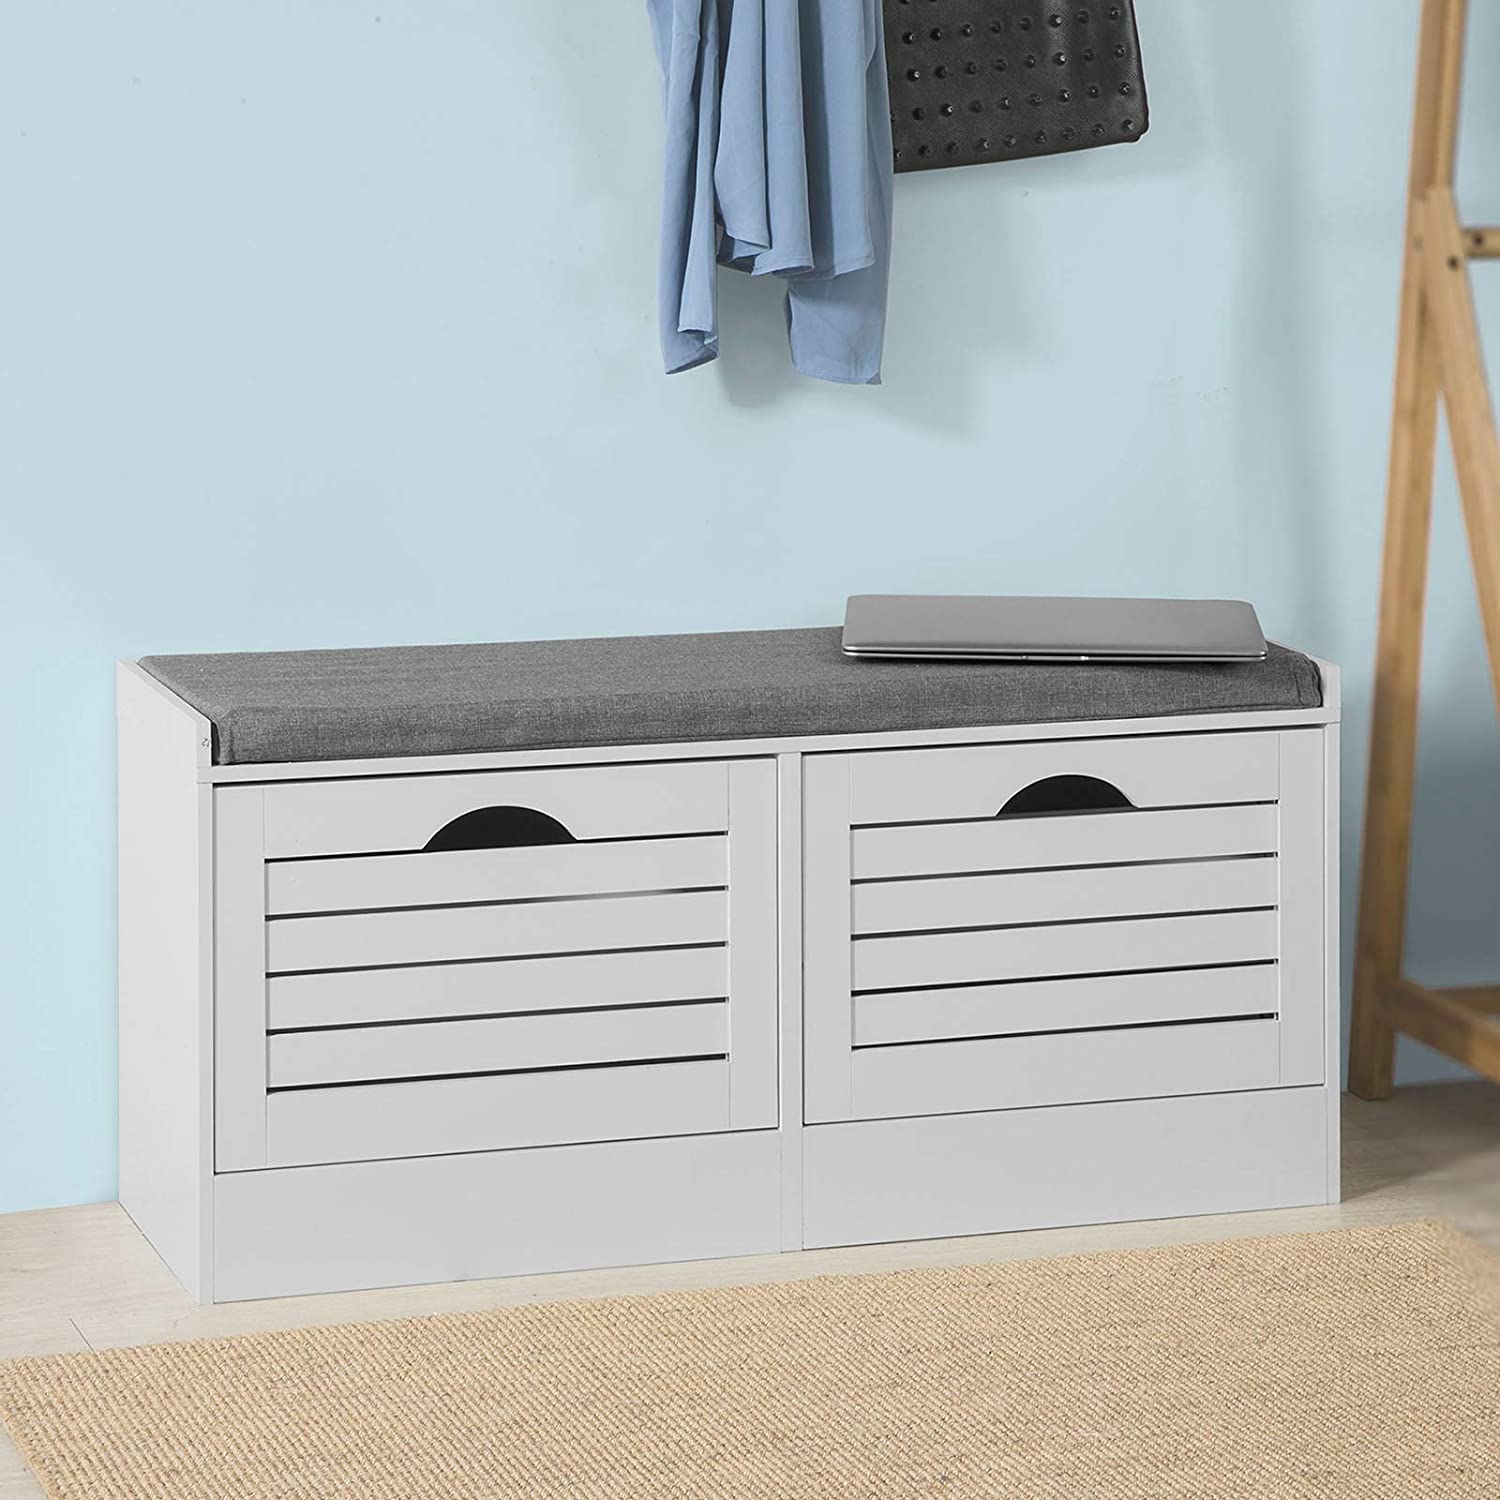 SoBuy FSR62-W Storage Bench with Drawers & Padded Seat Cushion Hallway Bench Shoe Cabinet Shoe Bench